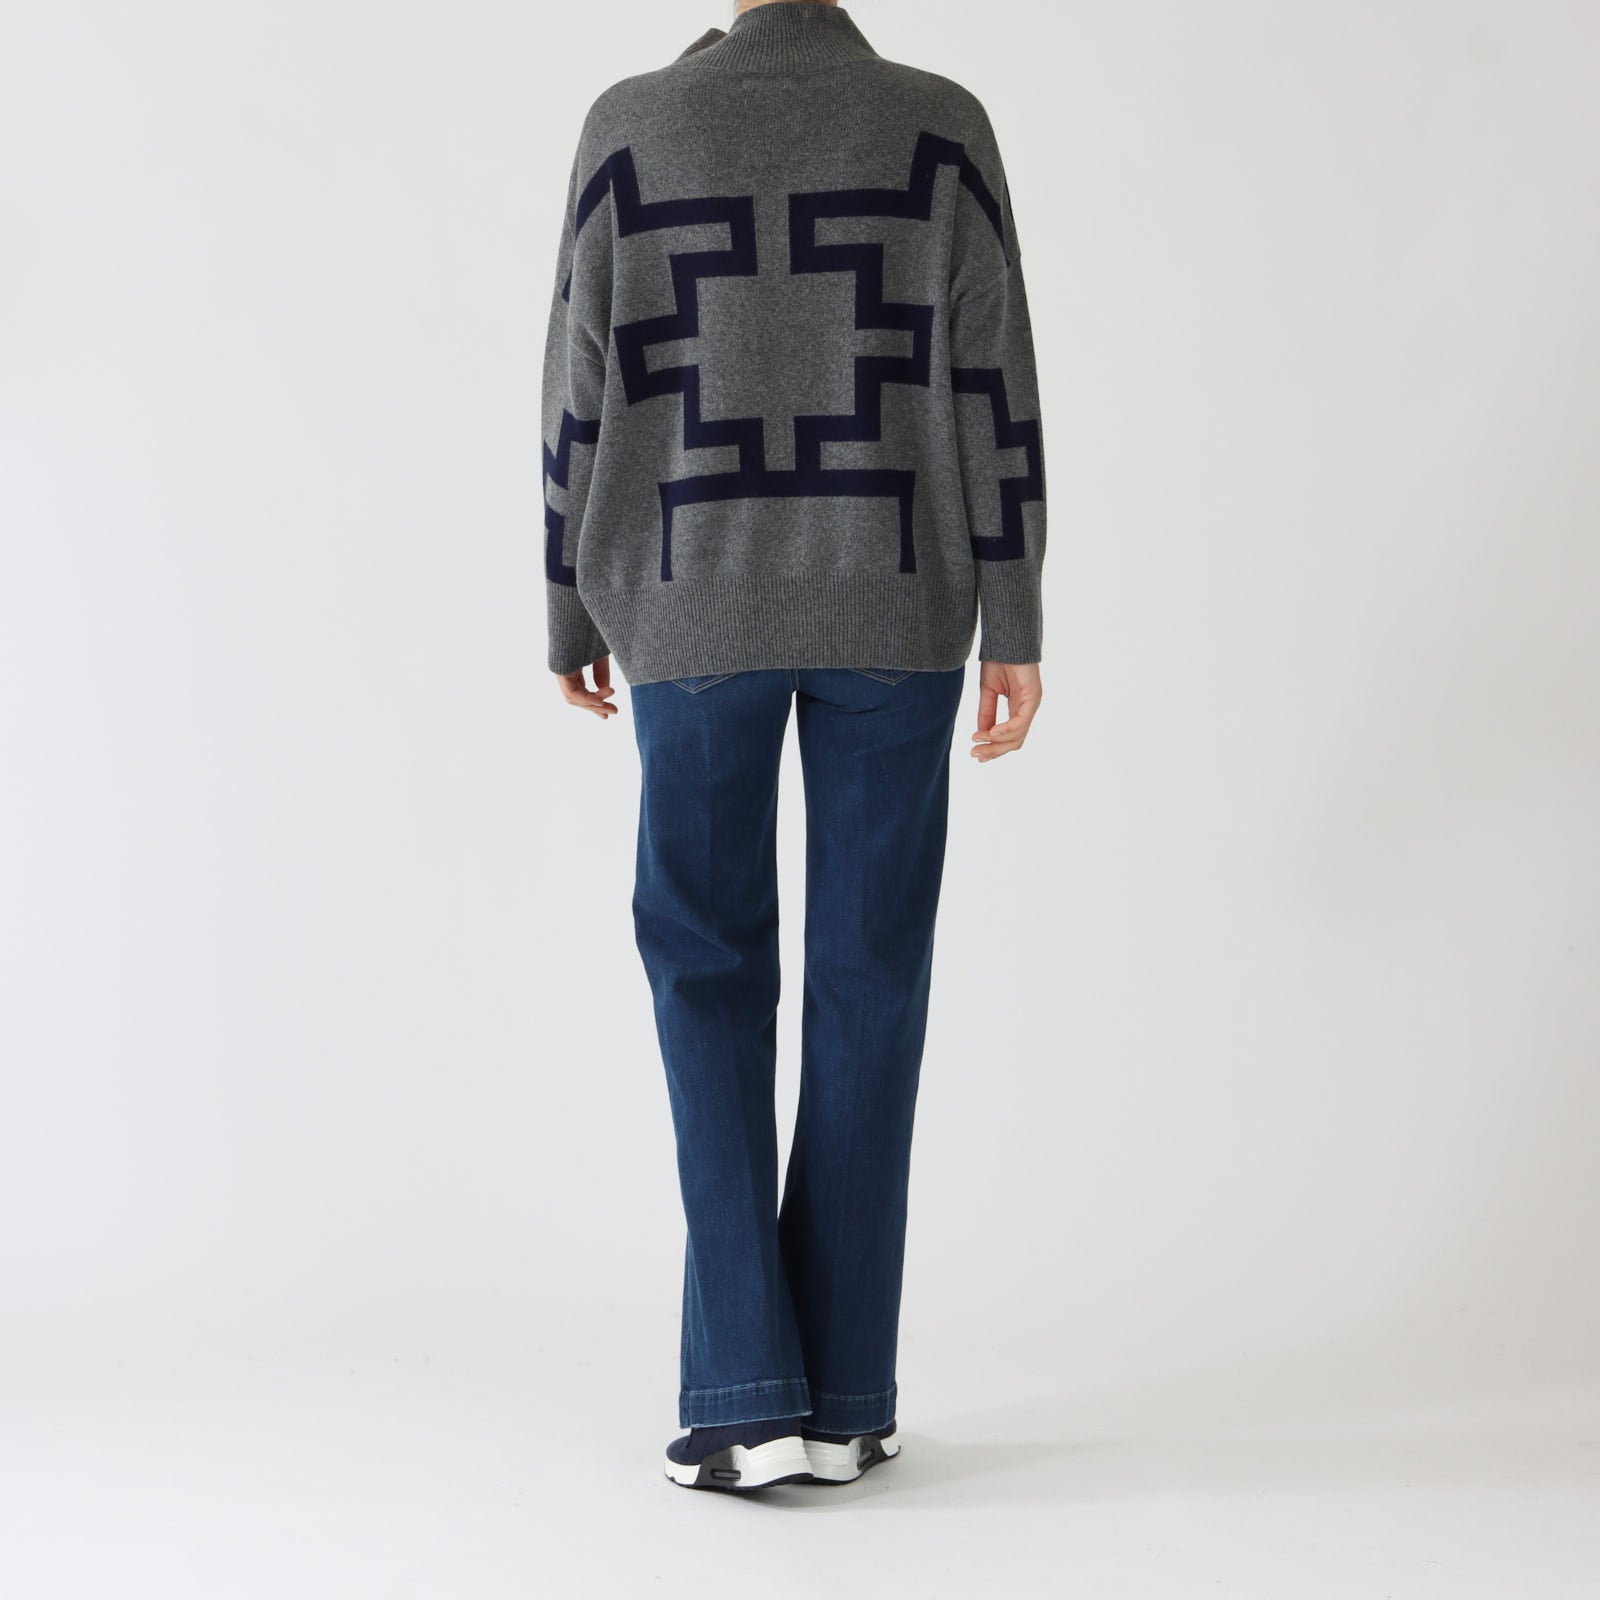 Iwar Charbon & Marine Cashmere Blend Sweater